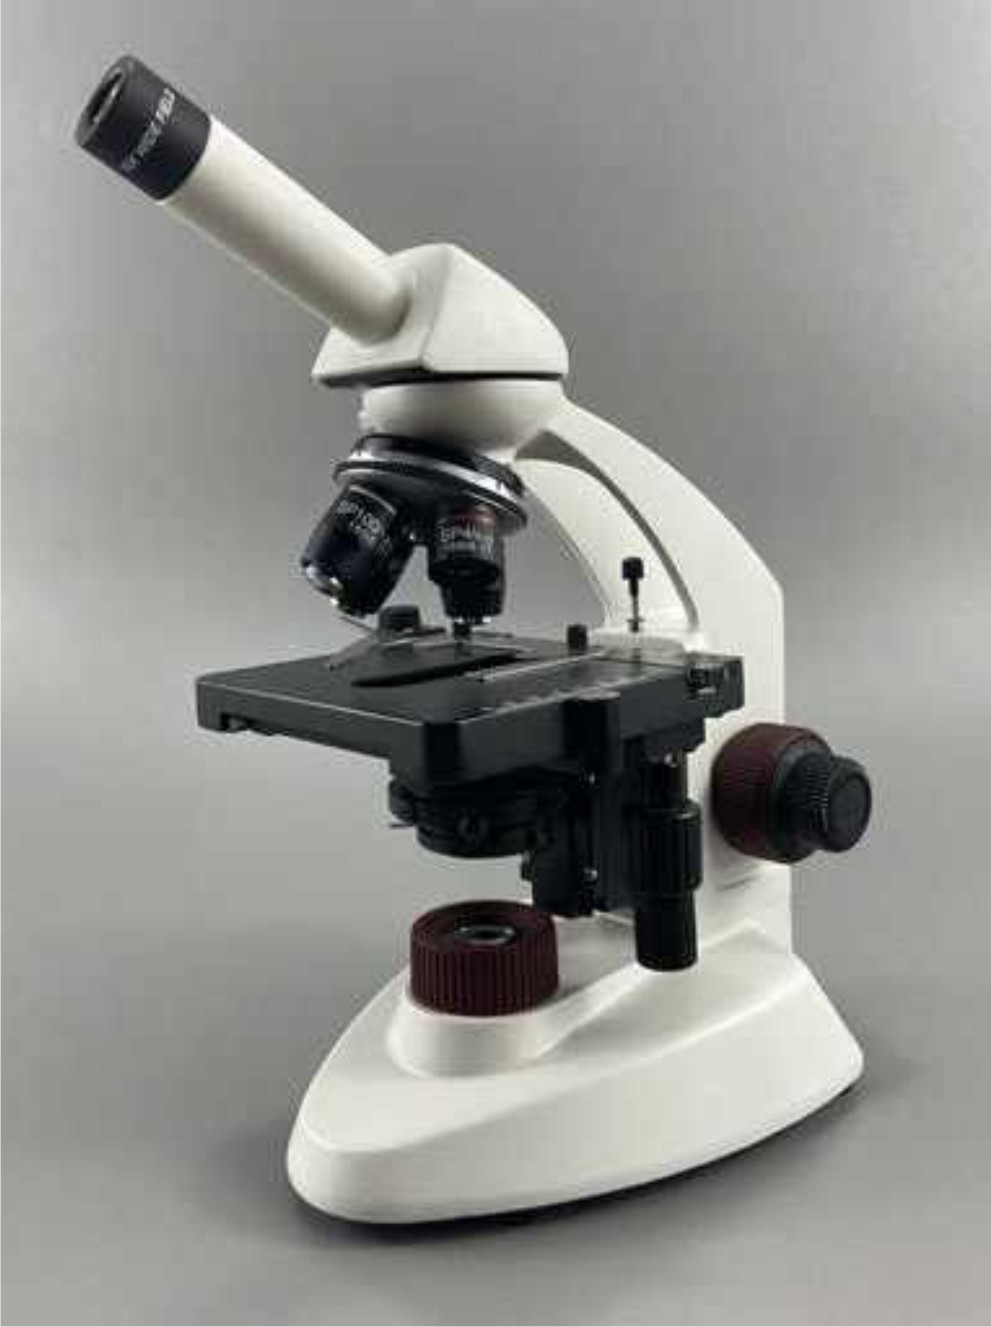  Coaxial Focusing Modern Pathological Microscope, Model No.: KI - COAXP